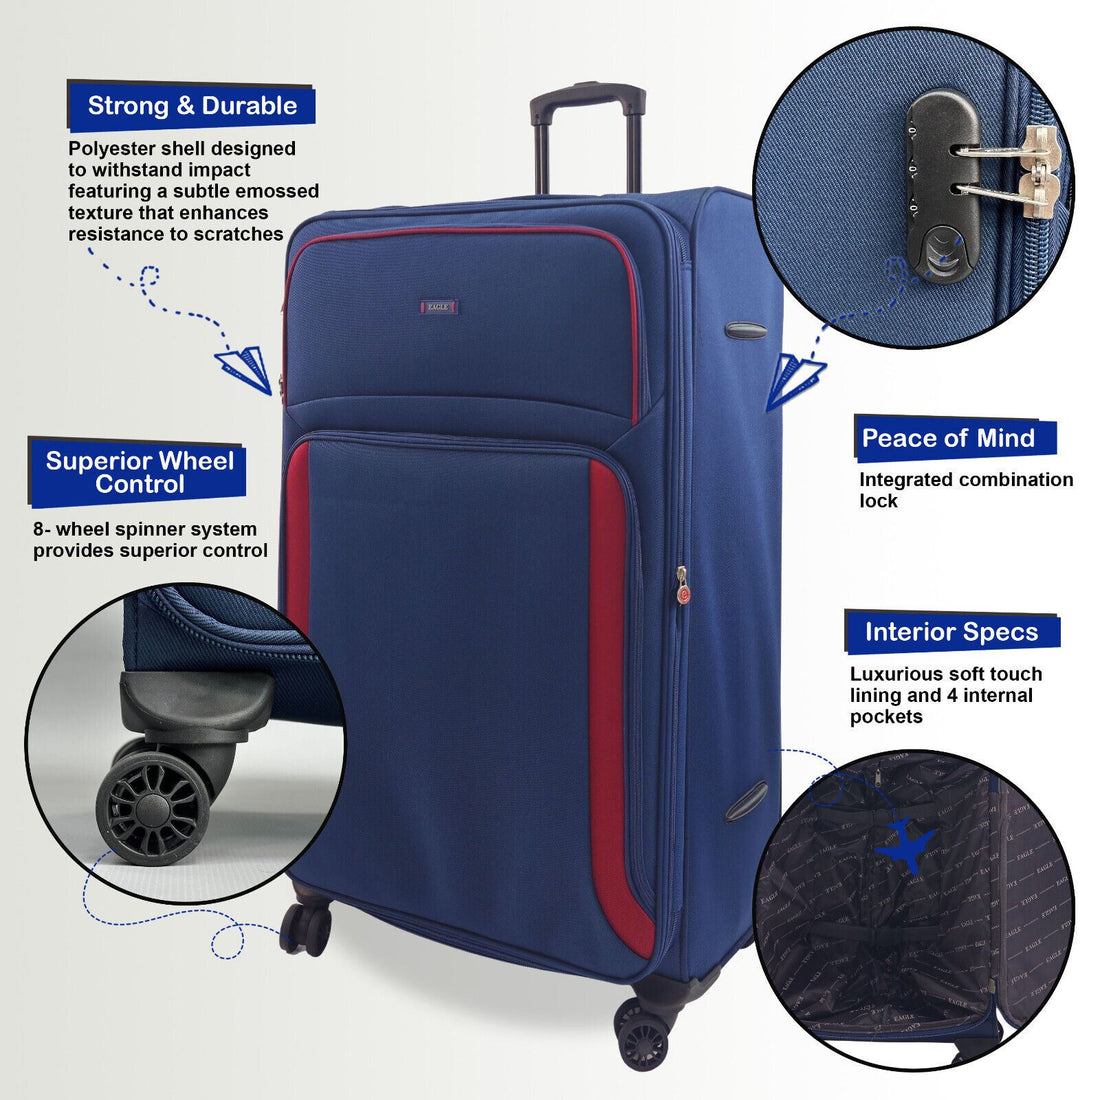 Ashland Set of 4 Soft Shell Suitcase in Navy